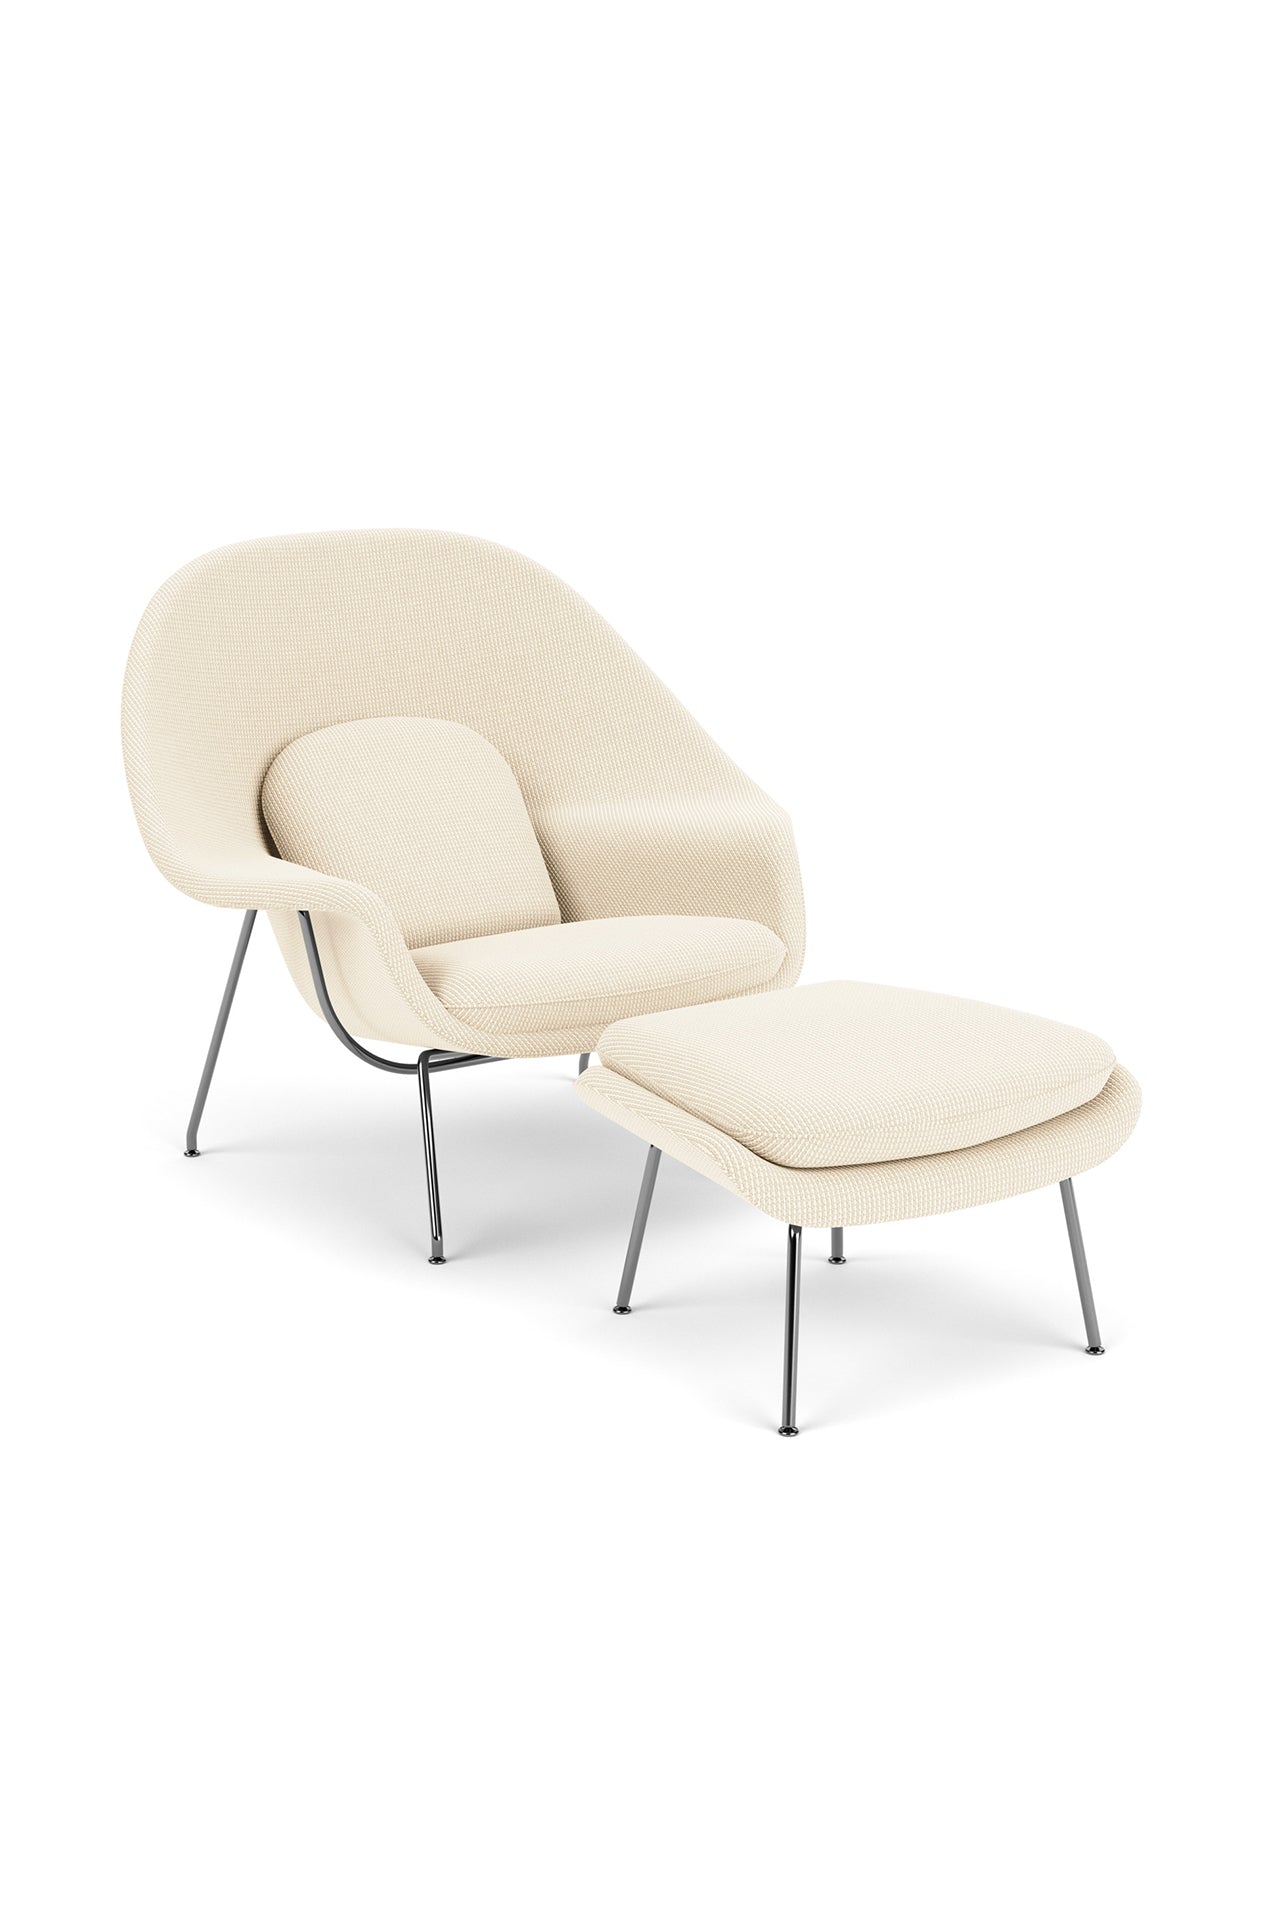 Knoll Womb Chair With Ottoman Designed By Eero Saarinen in Beige (6606269907059)